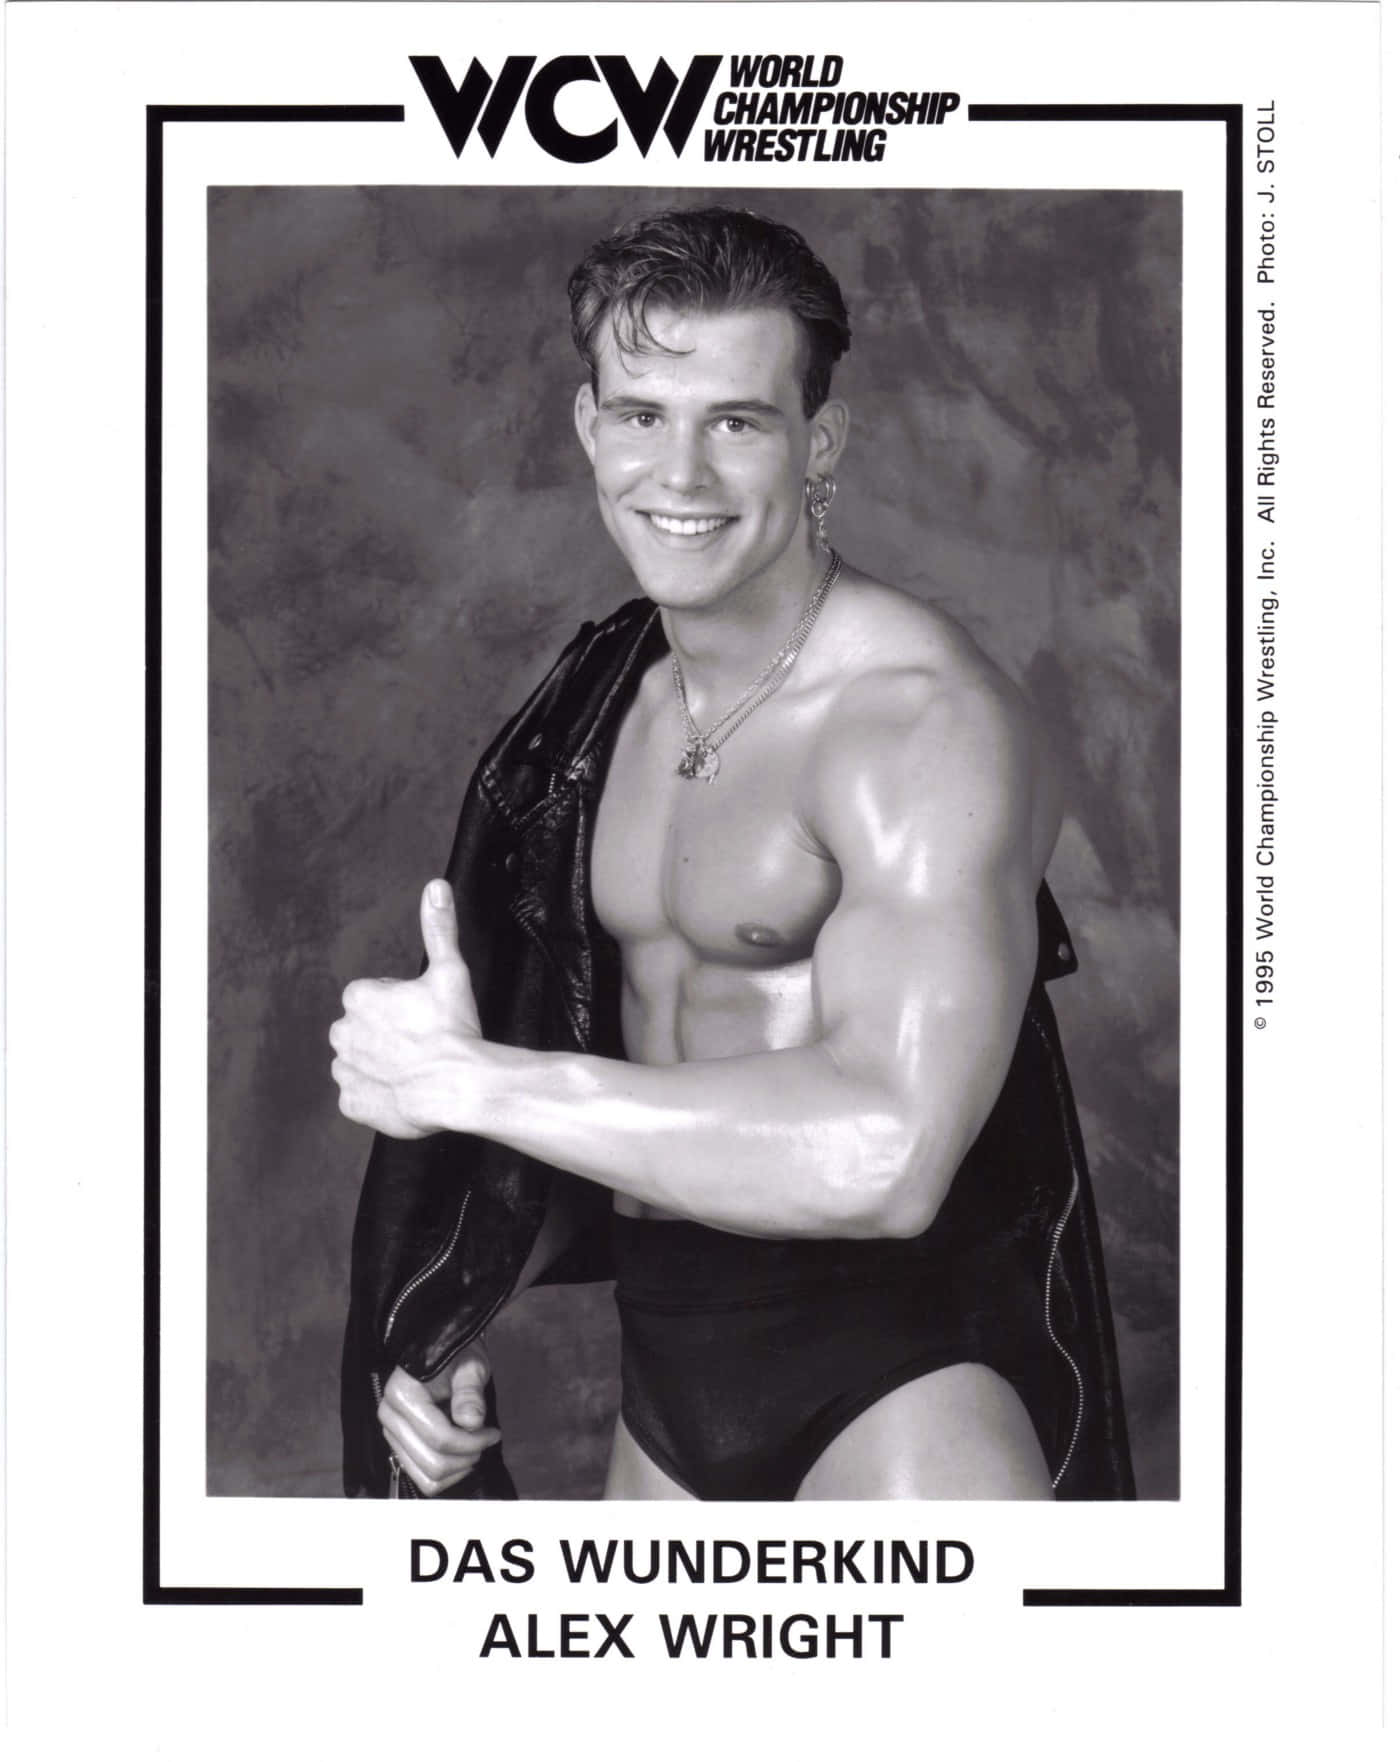 Alex Wright, Acclaimed WCW Wrestling Star Wallpaper